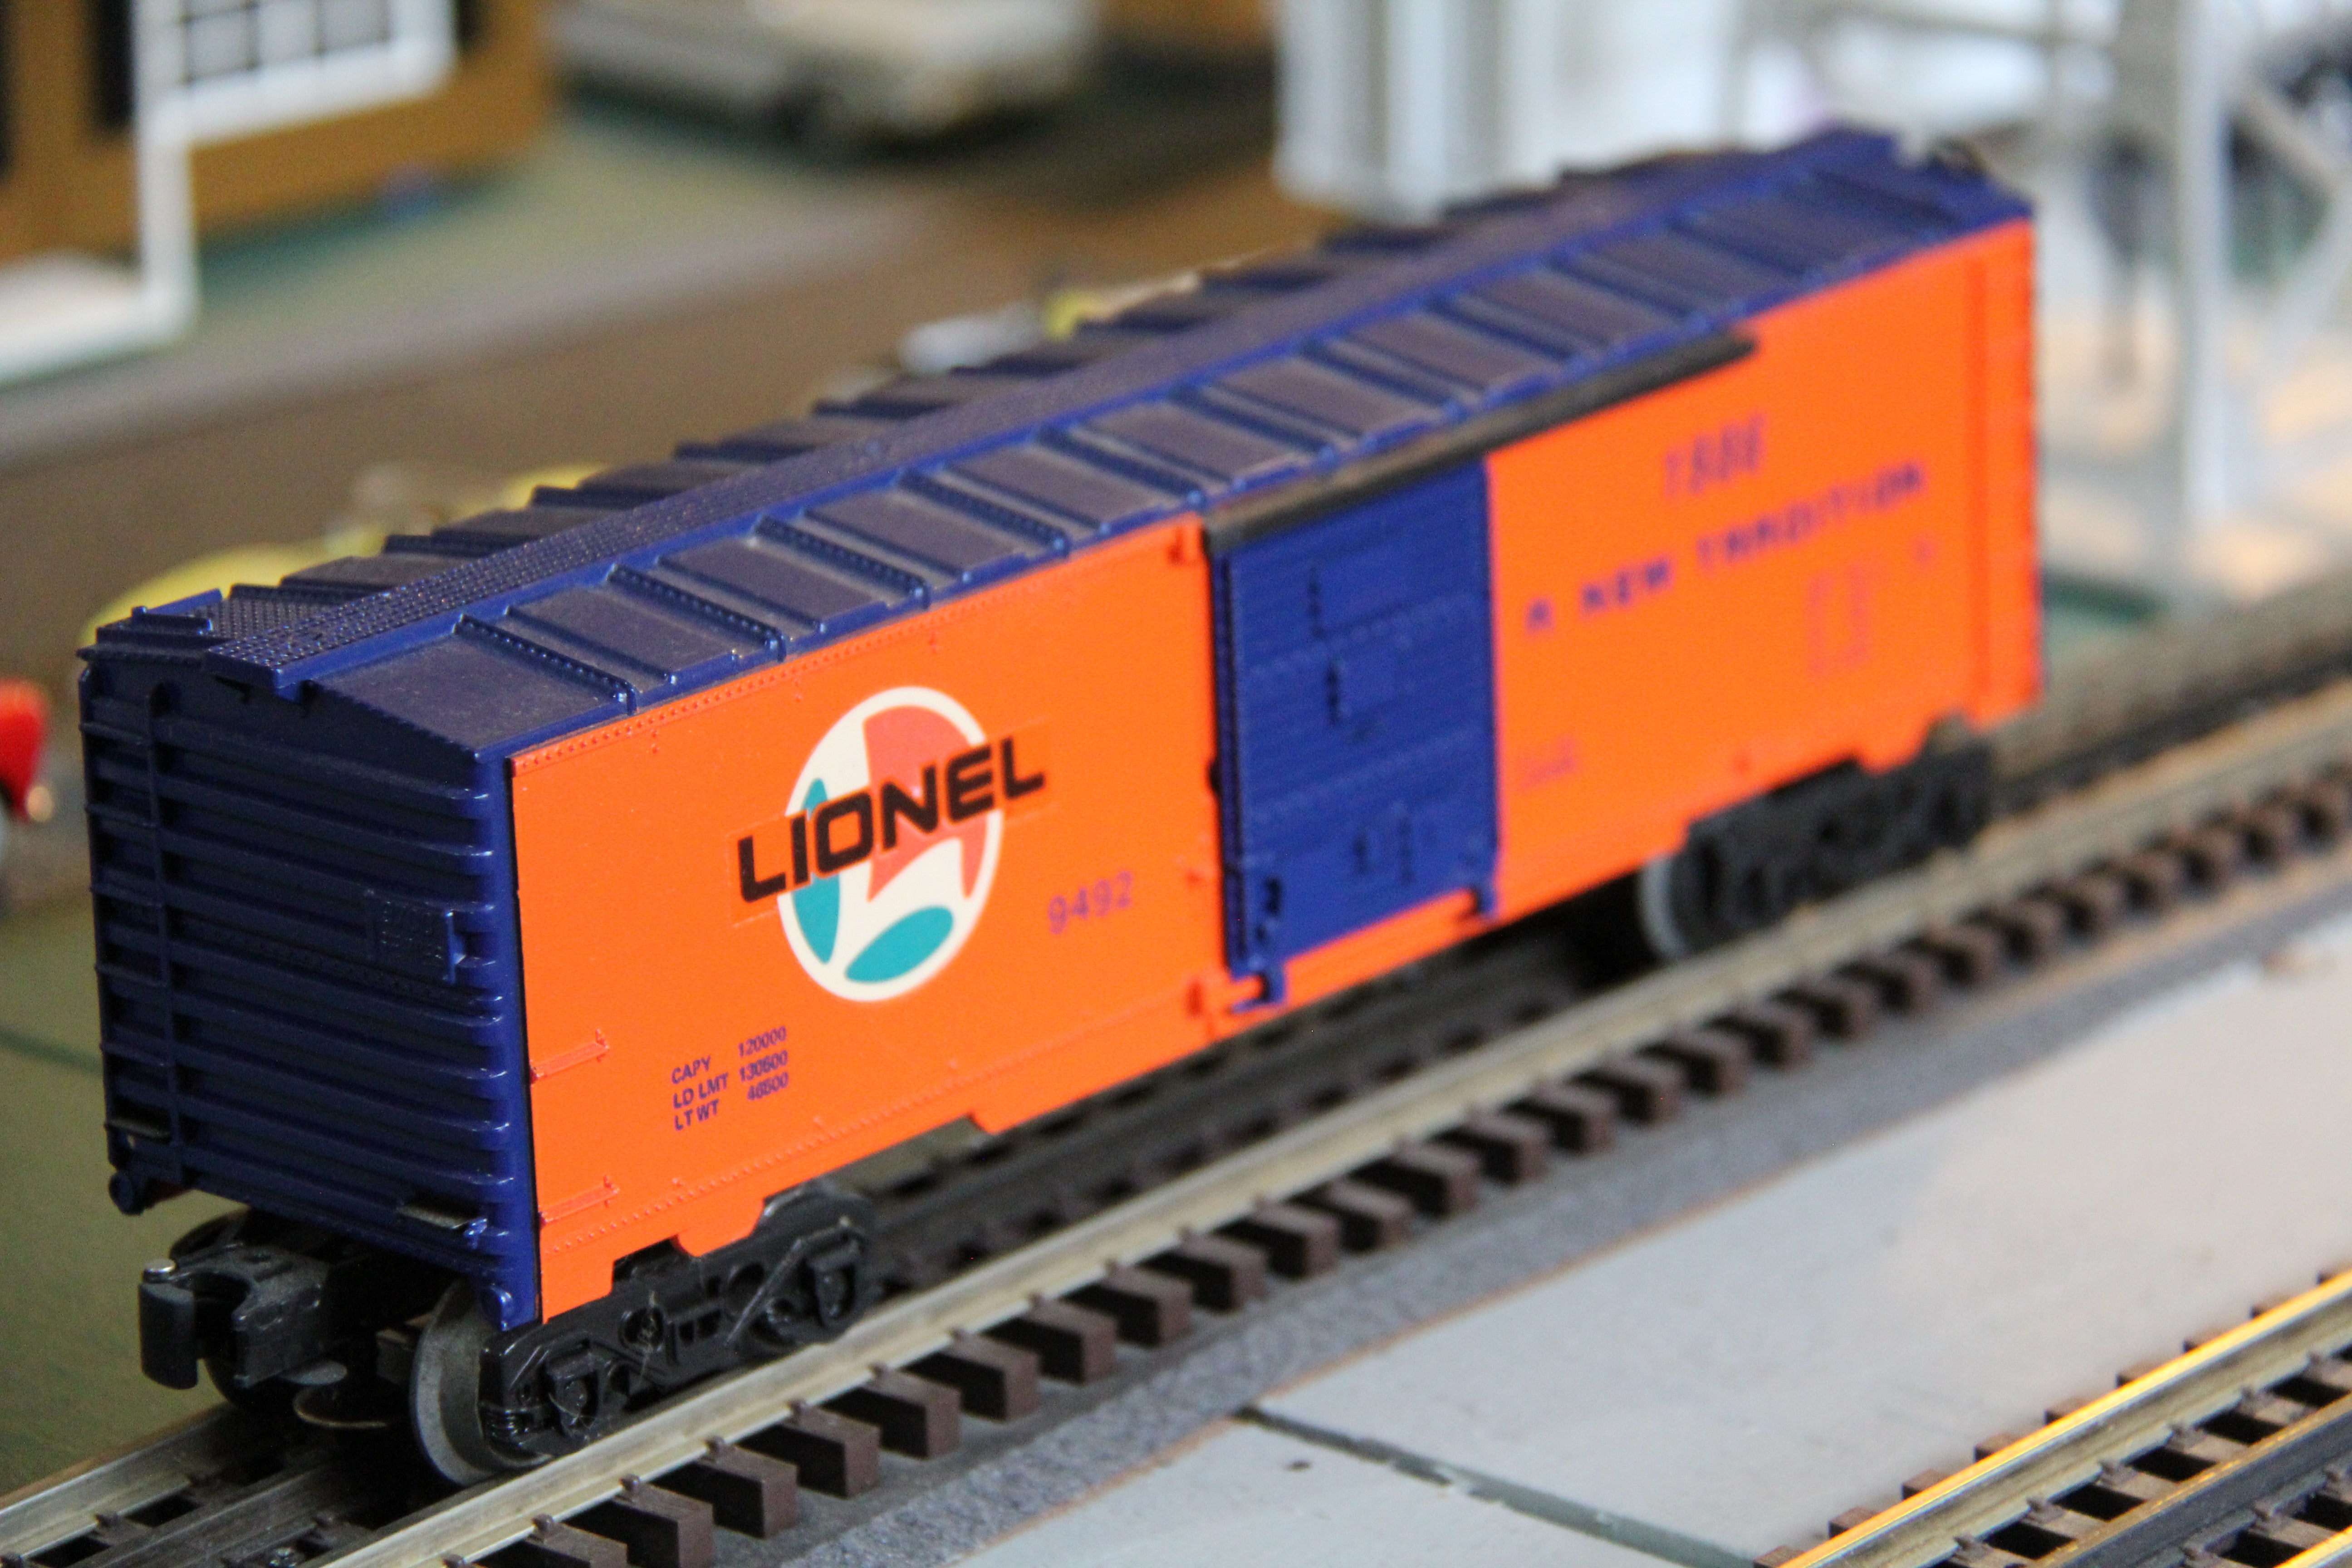 Lionel 6-9492 Lionel Lines Box Car-Second hand-M4277